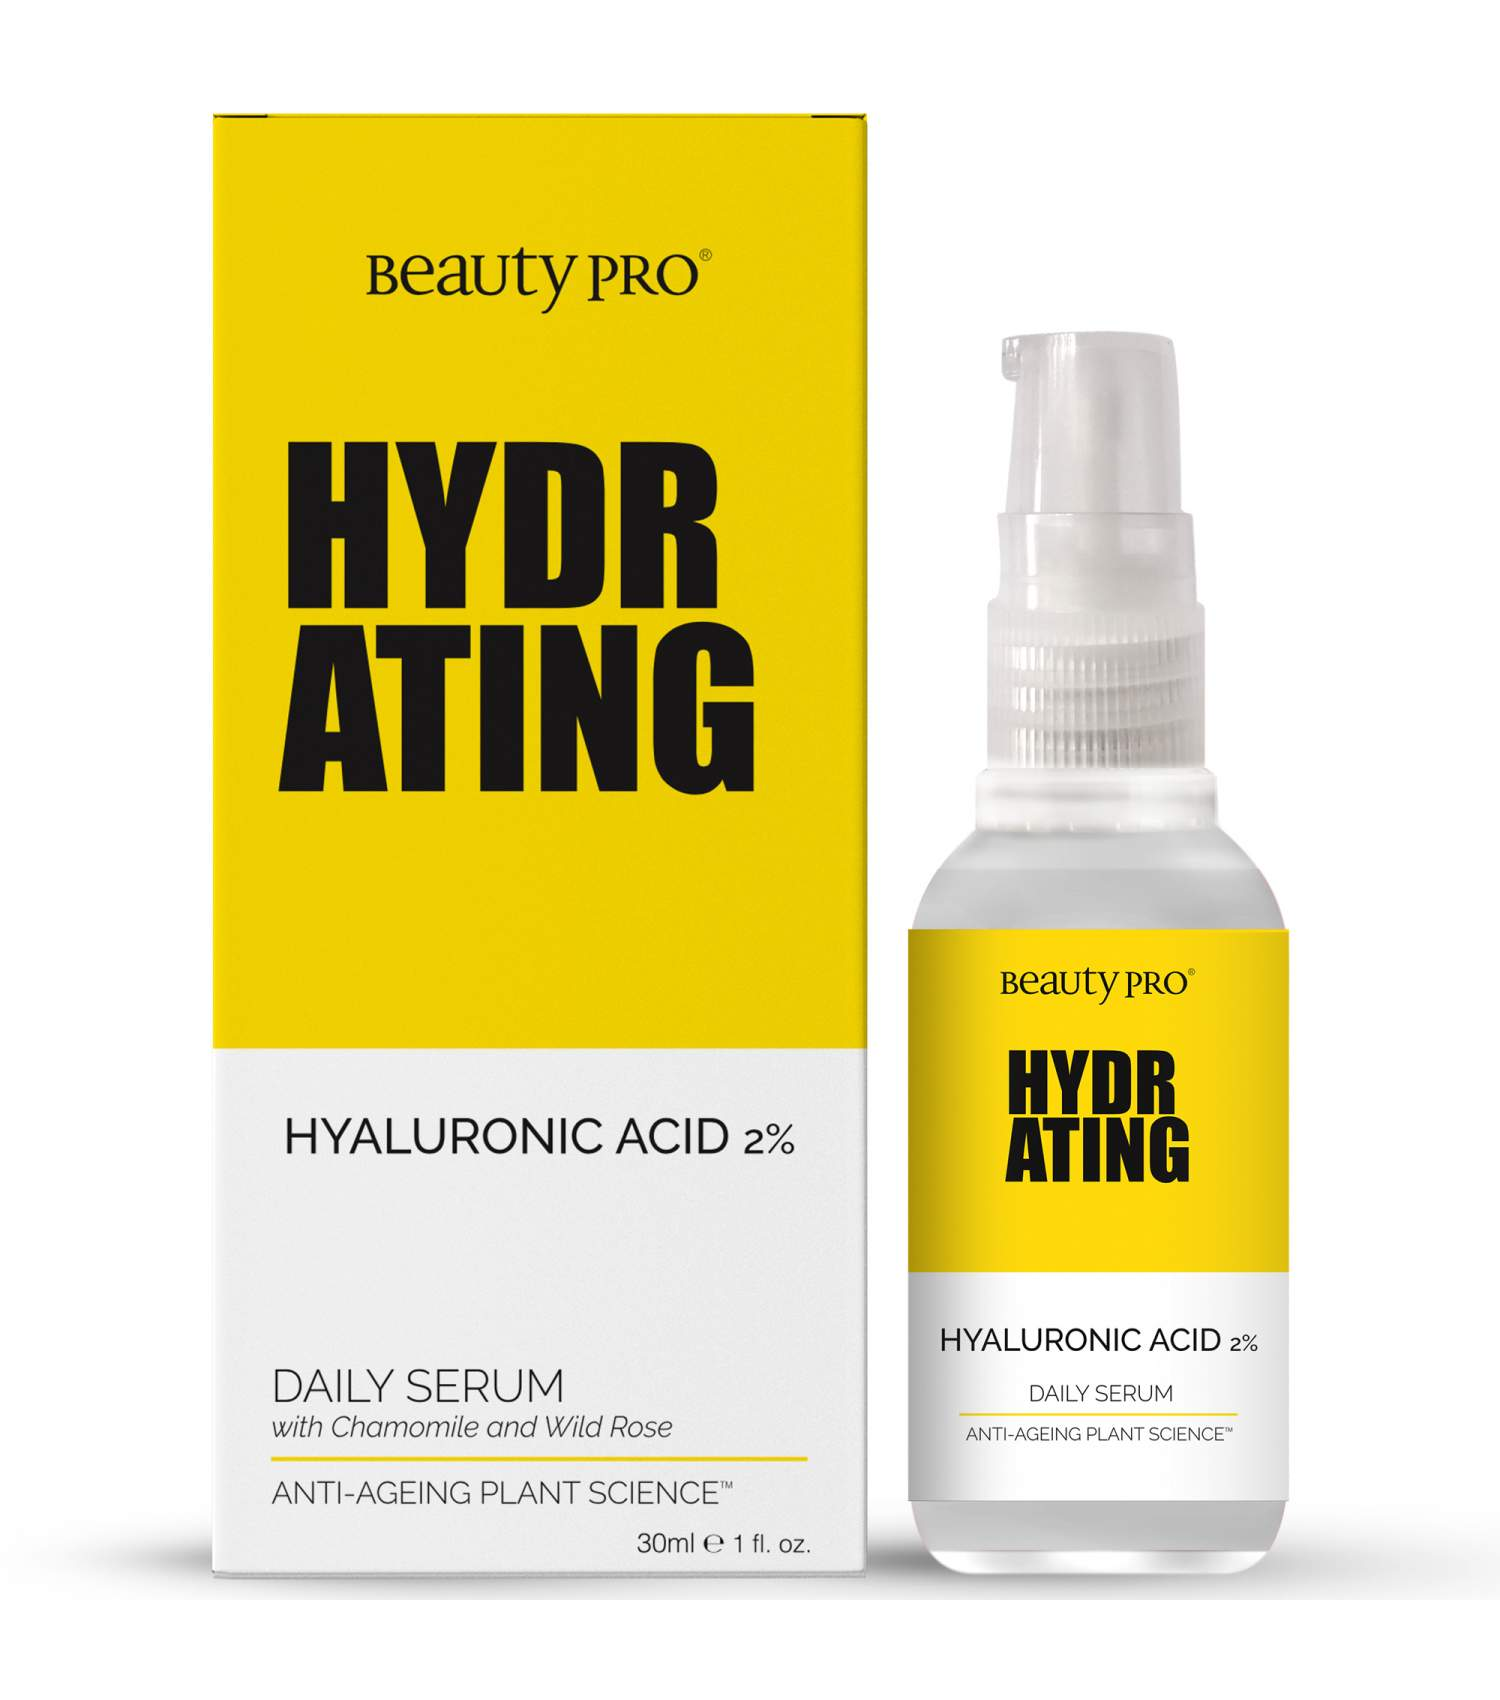 BeautyPro HYDRATING 1% Hyaluronic Acid Daily Serum